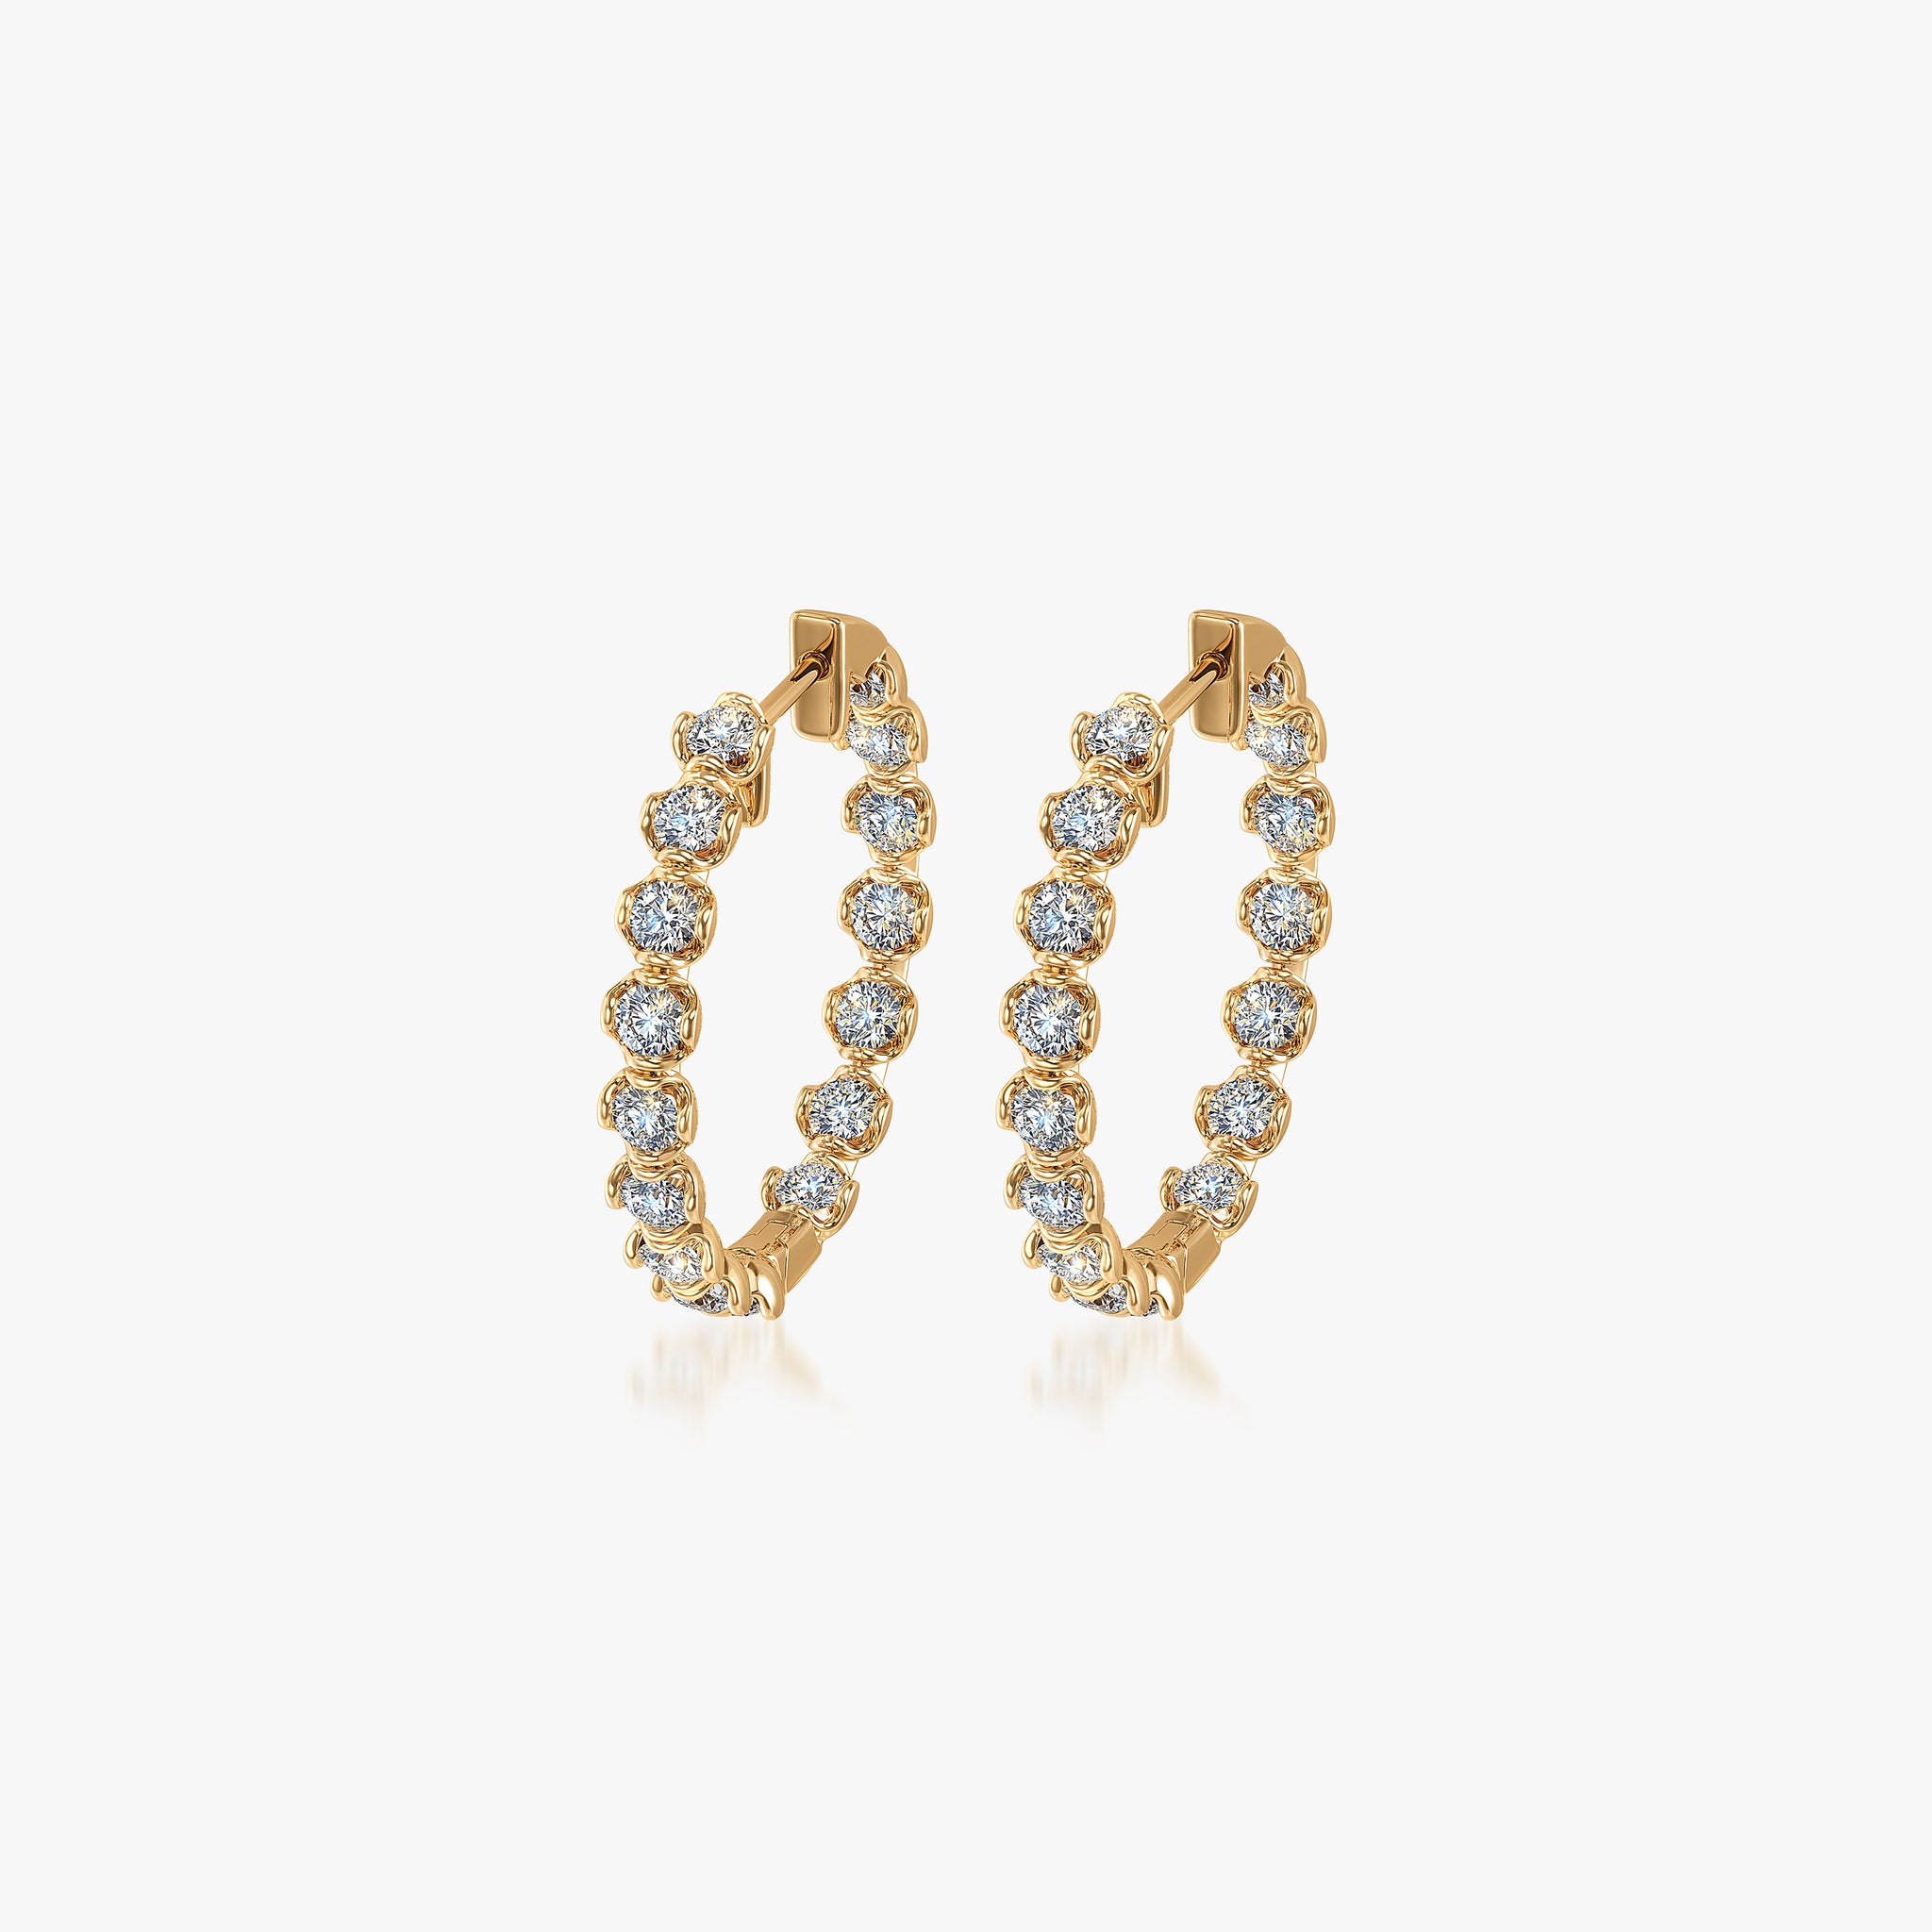 Lock & Key Dangle Hoop Earrings in 14K Yellow Gold - 100% Exclusive